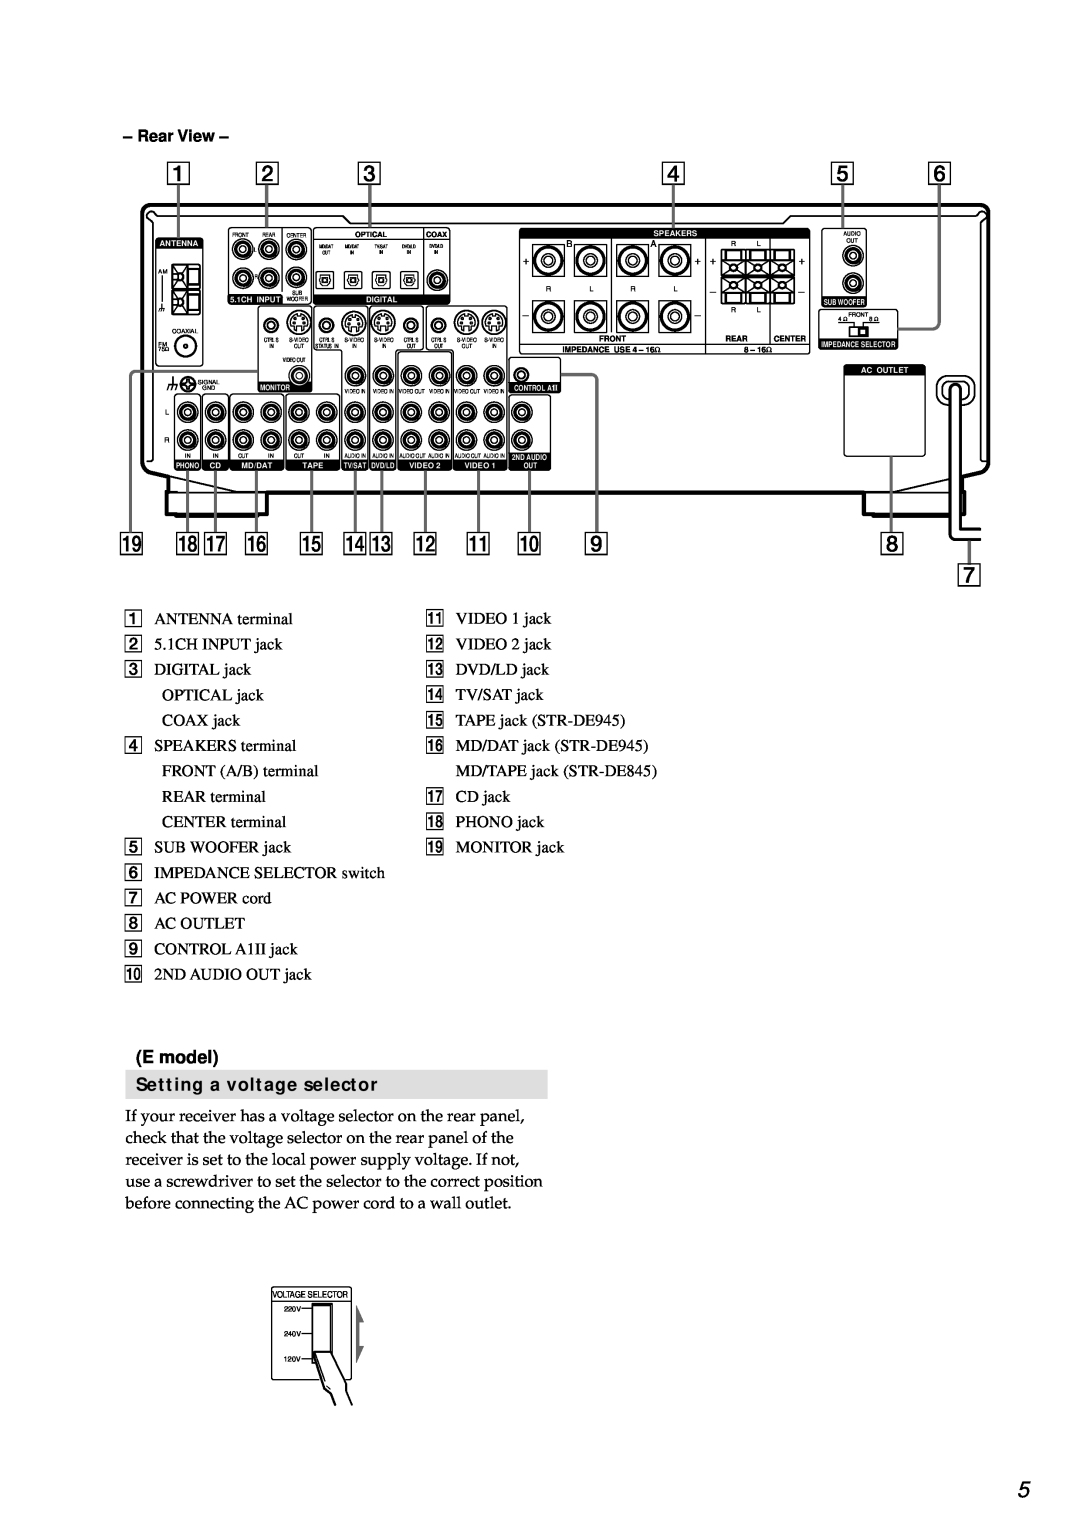 Sony STR-DE845 service manual qkqj qh qg qfqd, qs qa q 